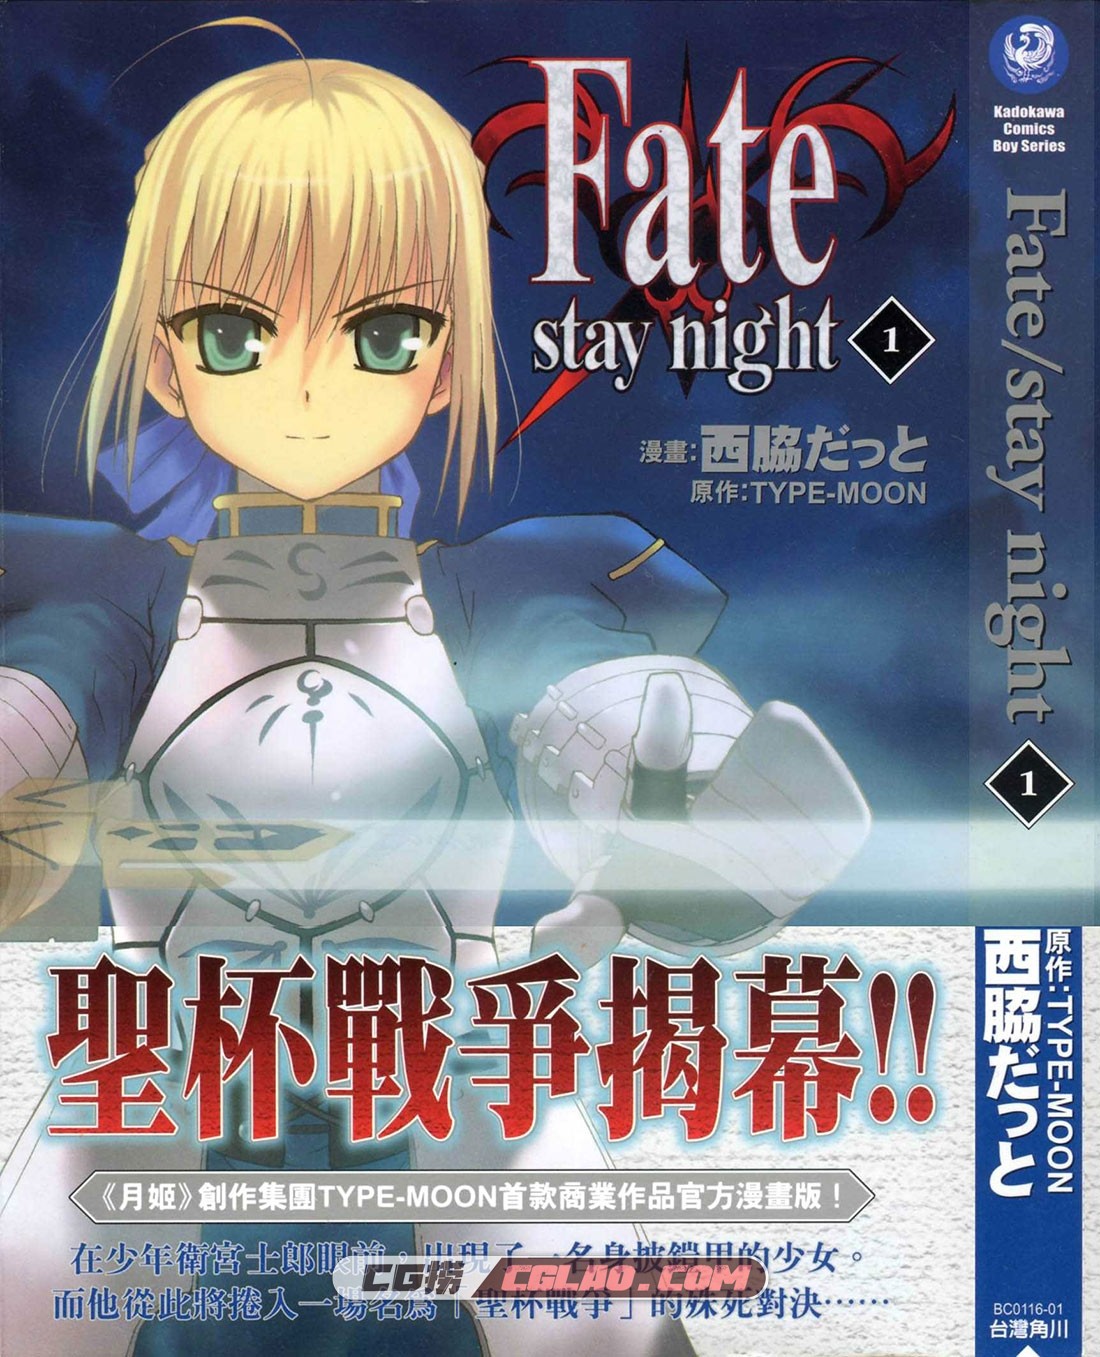 Fate stay night TYPE-MOON 西脇だつと 1-20卷全集下载网盘漫画,000.jpg